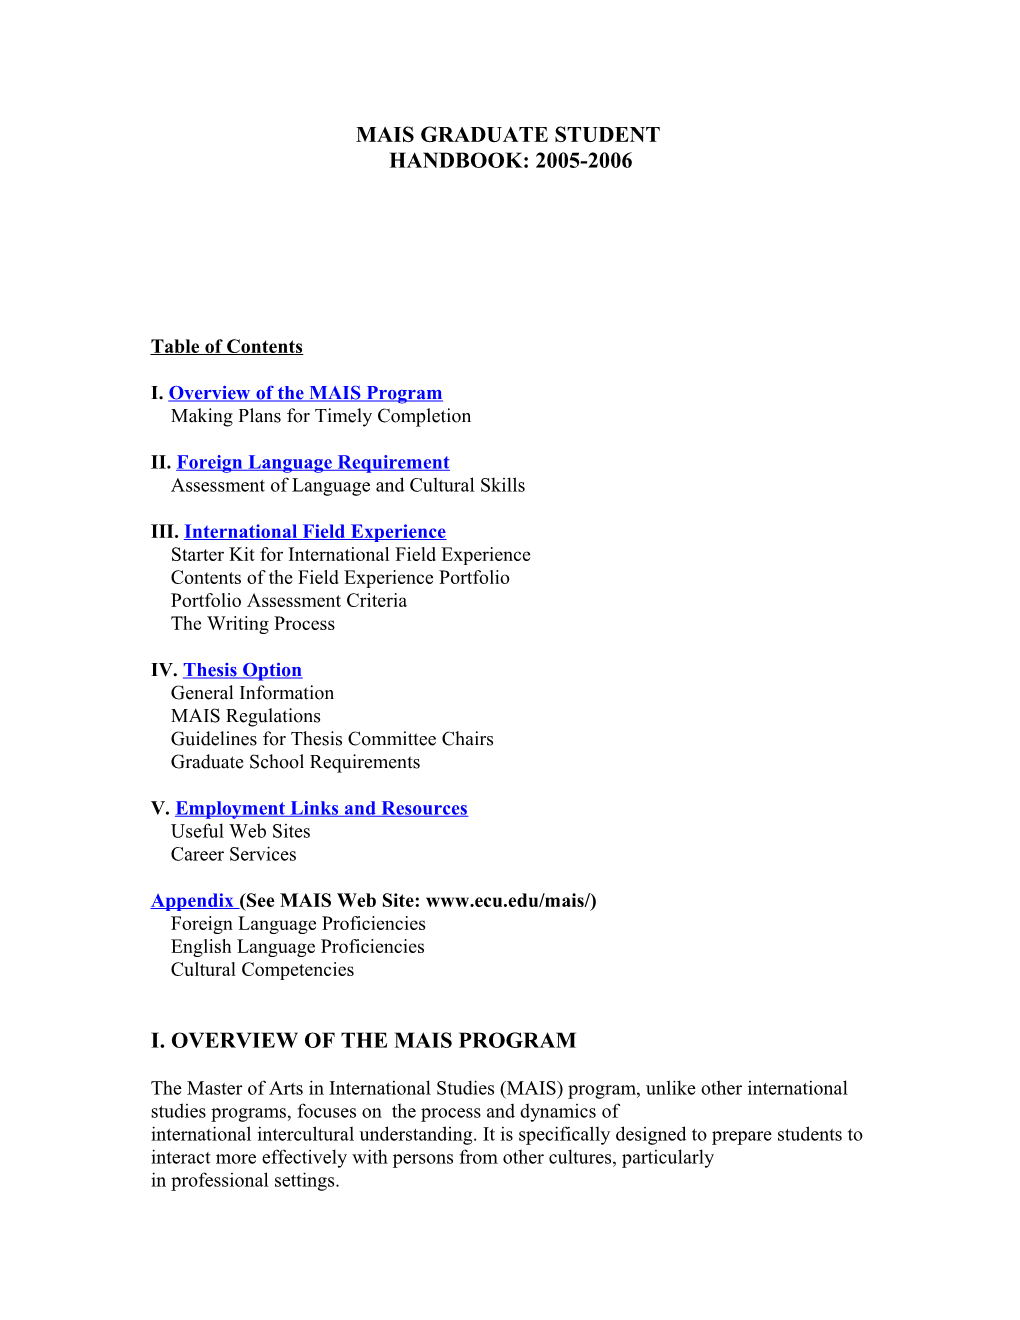 Mais Graduate Student Handbook:2005-2006